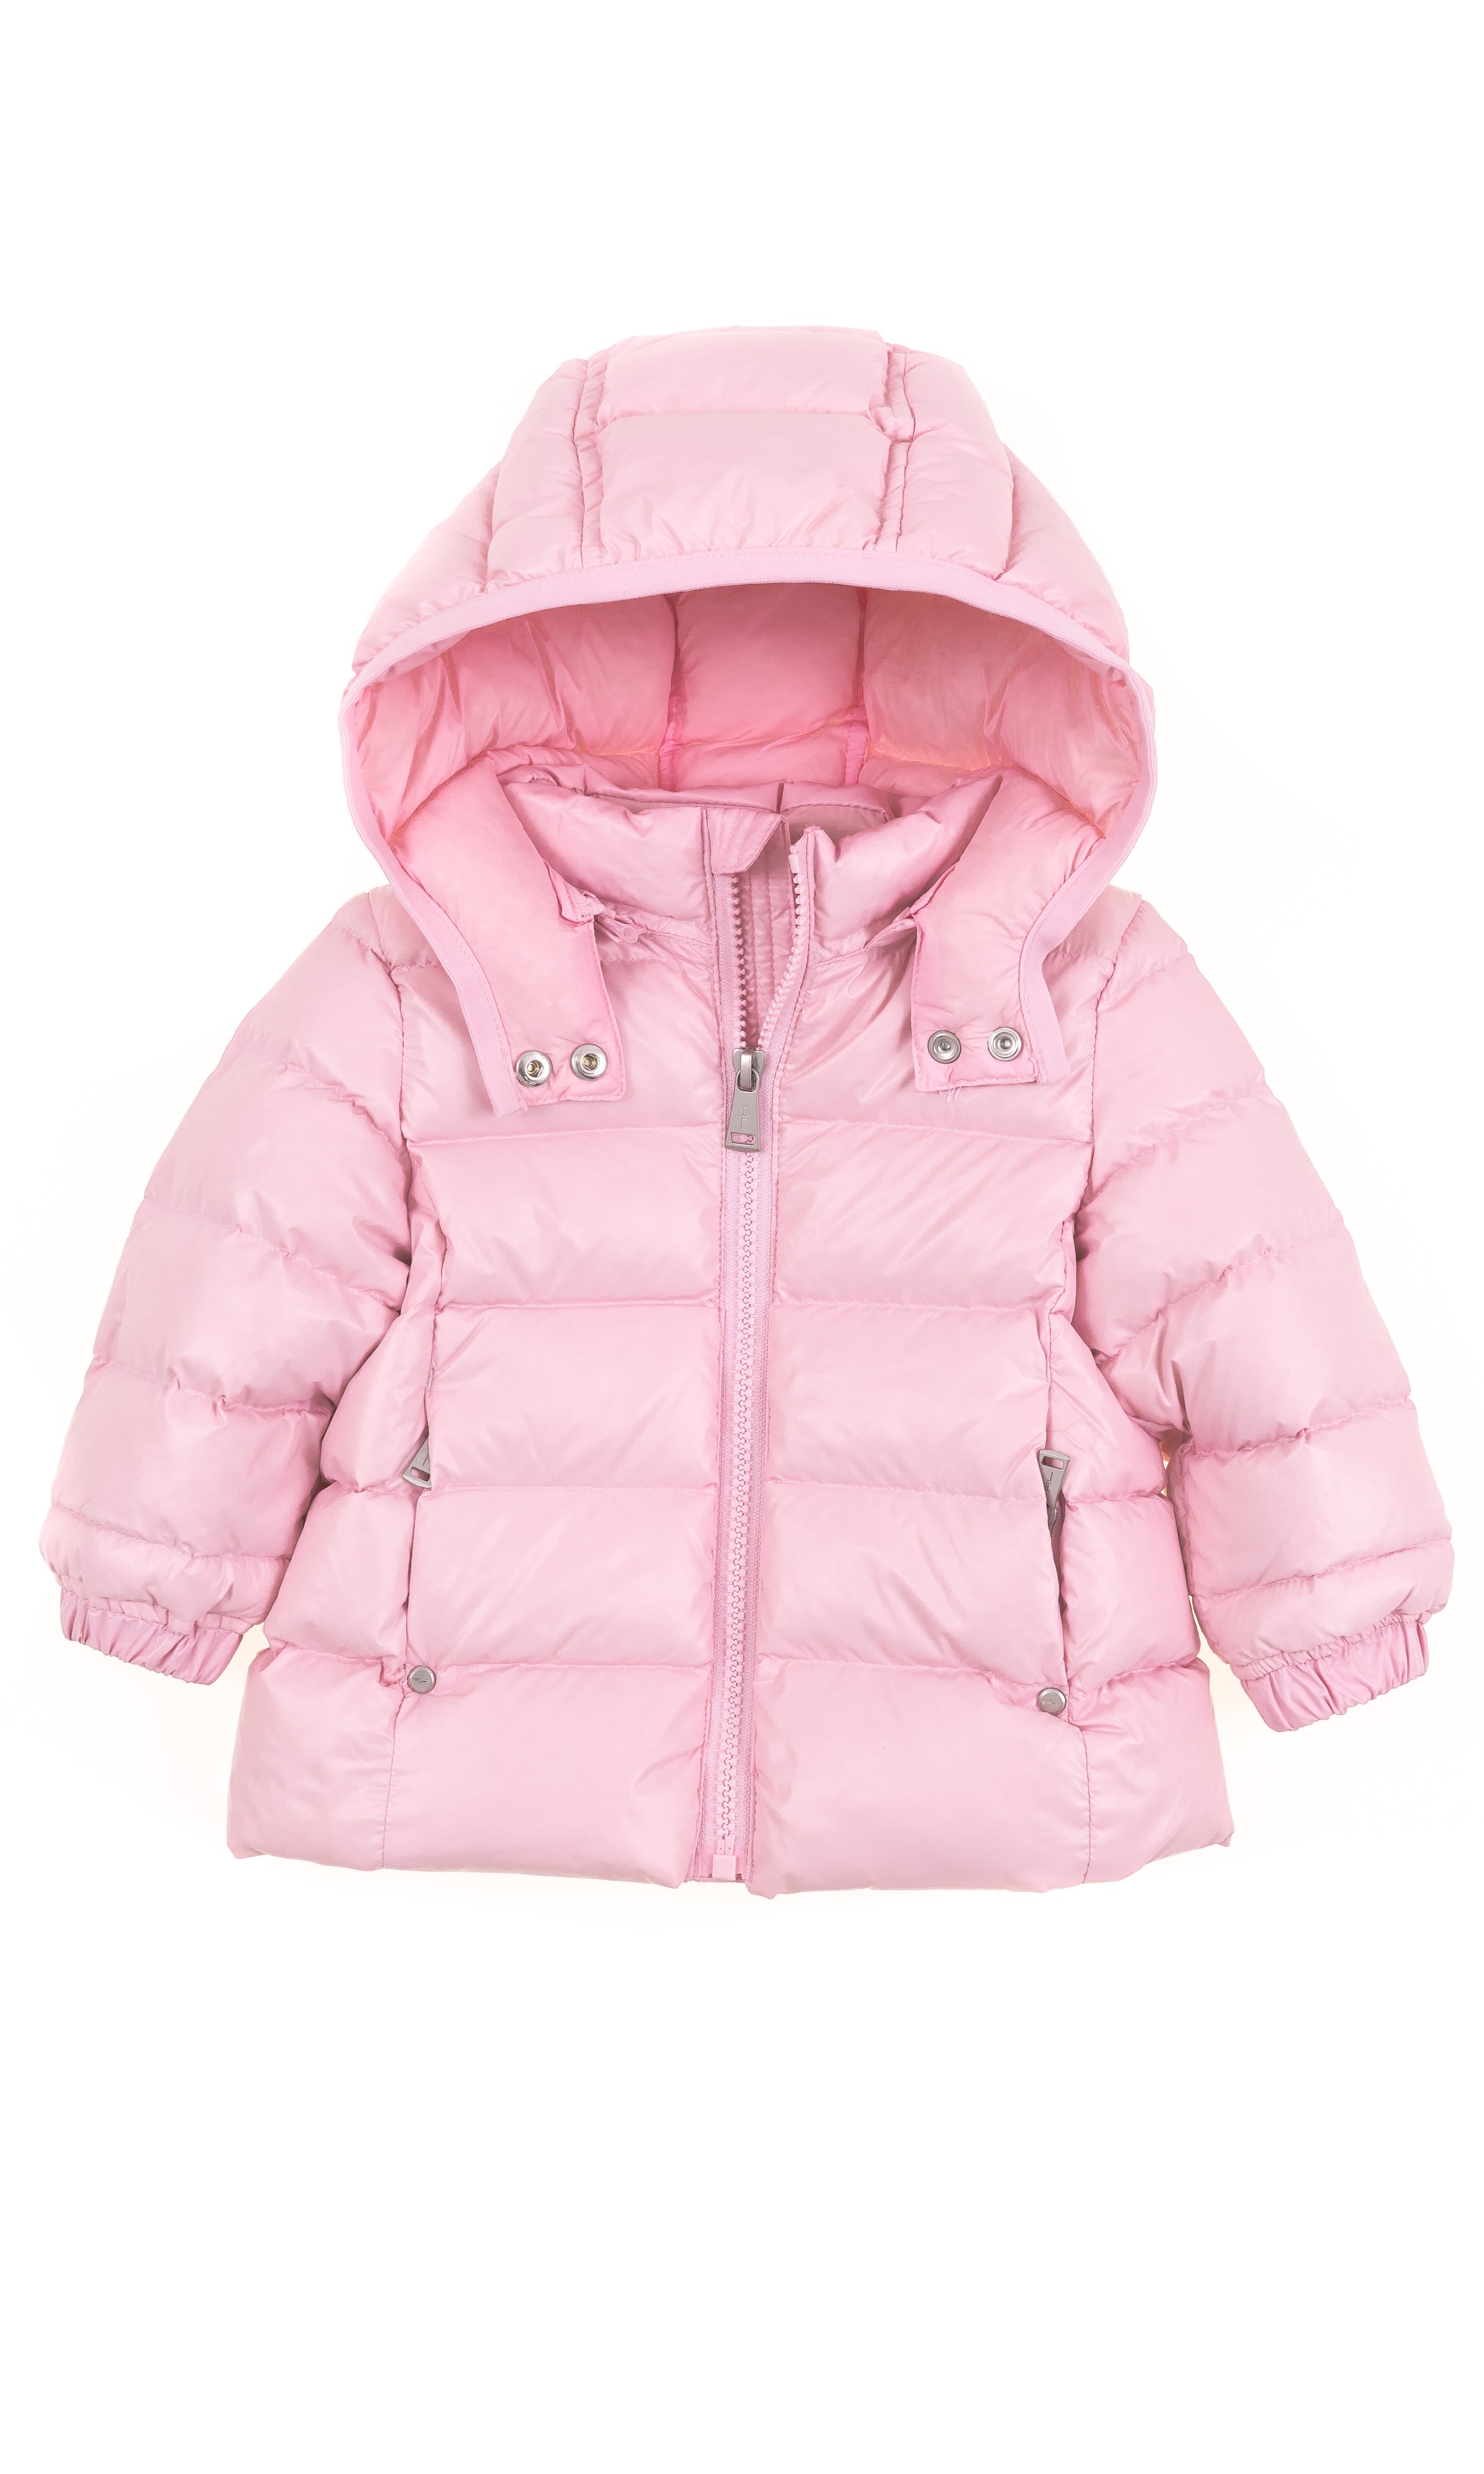 polo pink jacket